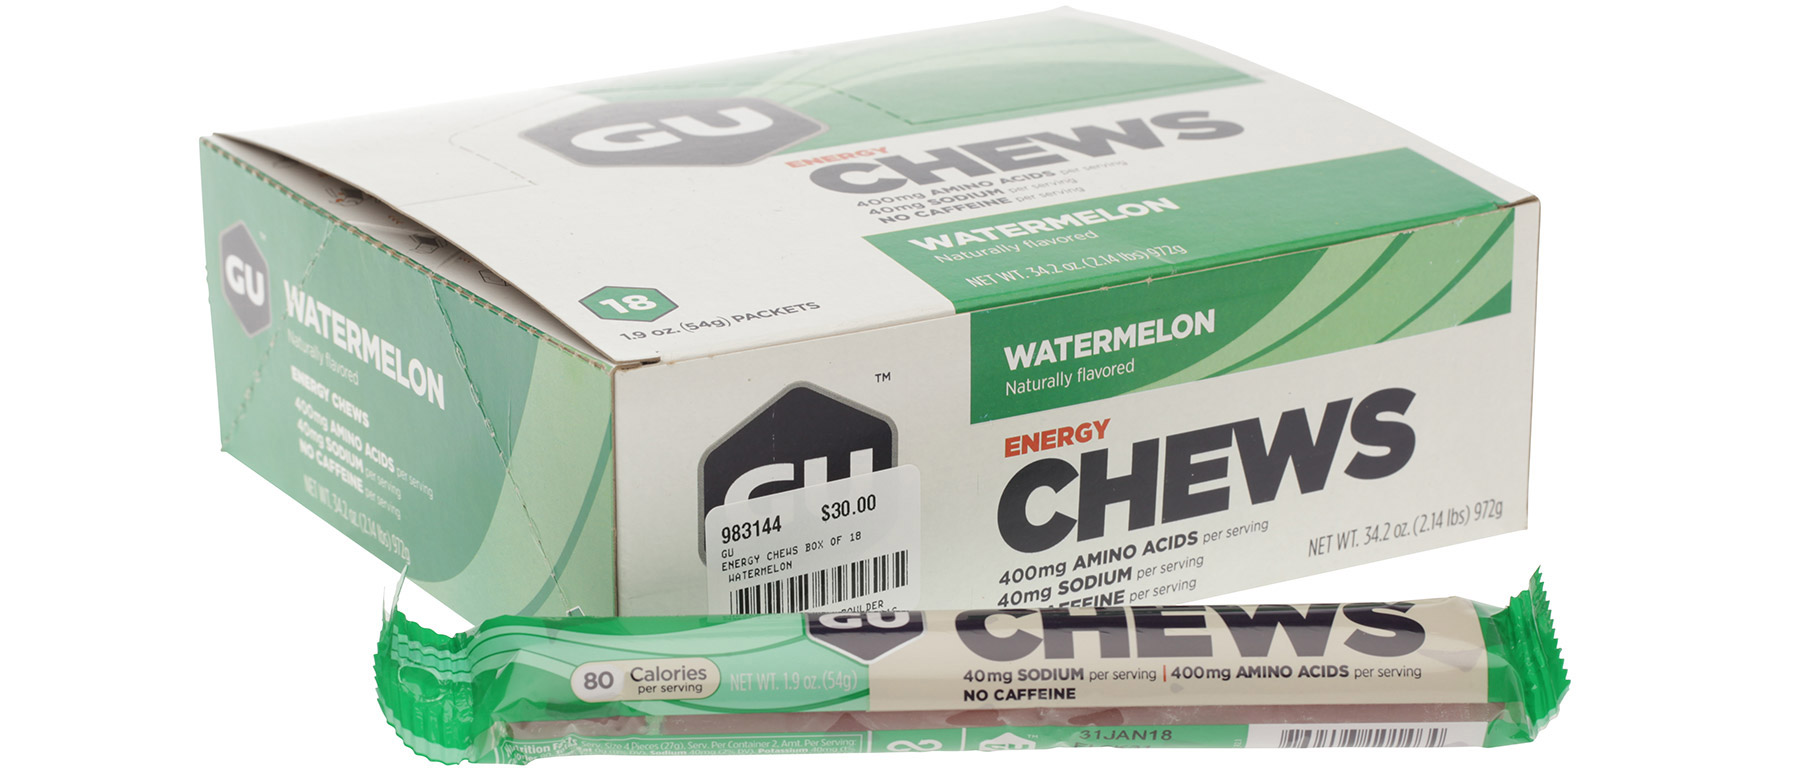 GU Energy Chews Box of 18